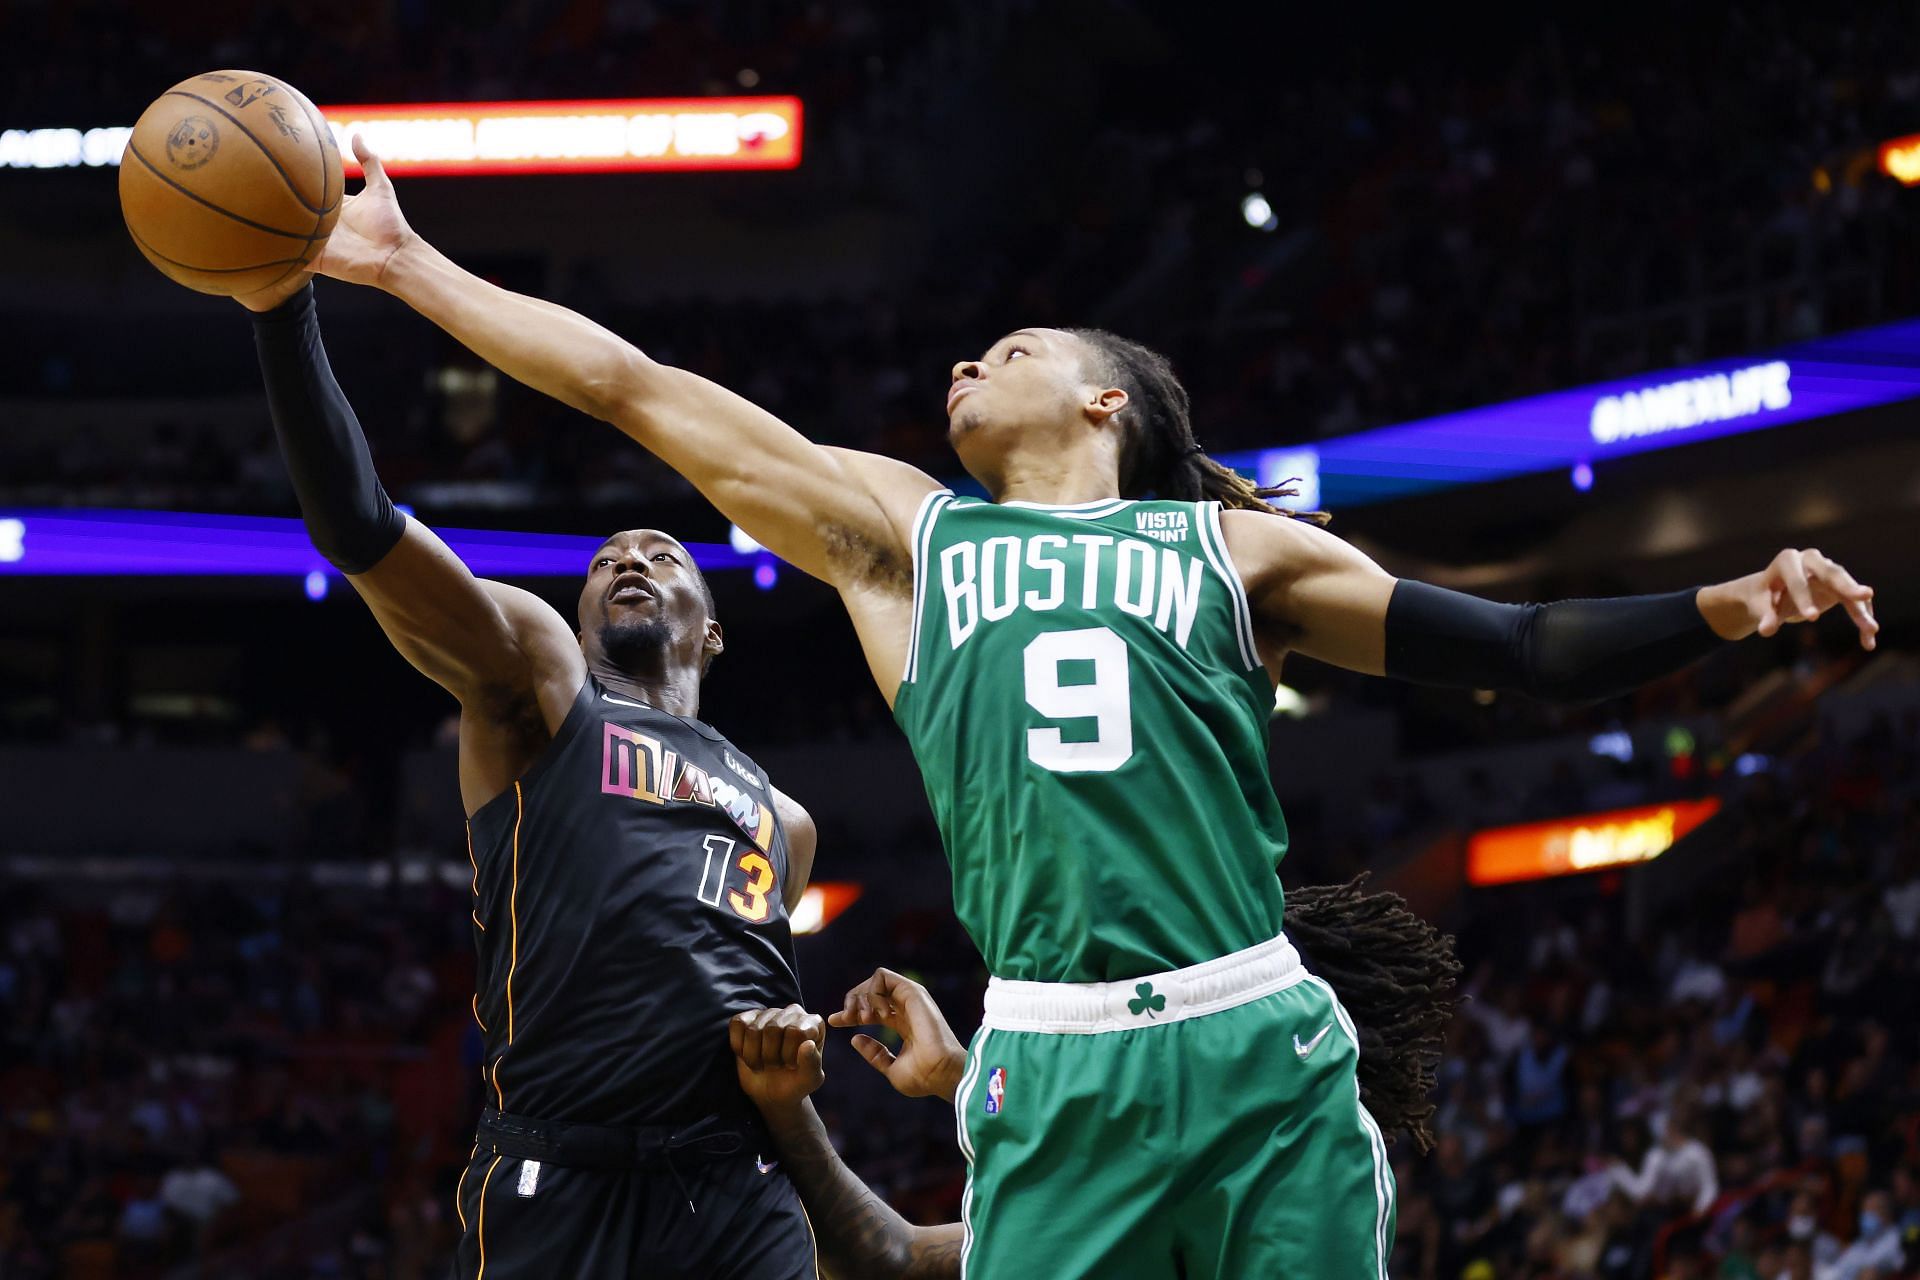 Boston Celtics will lock horns with the Miami Heat at the TD Garden on Monday